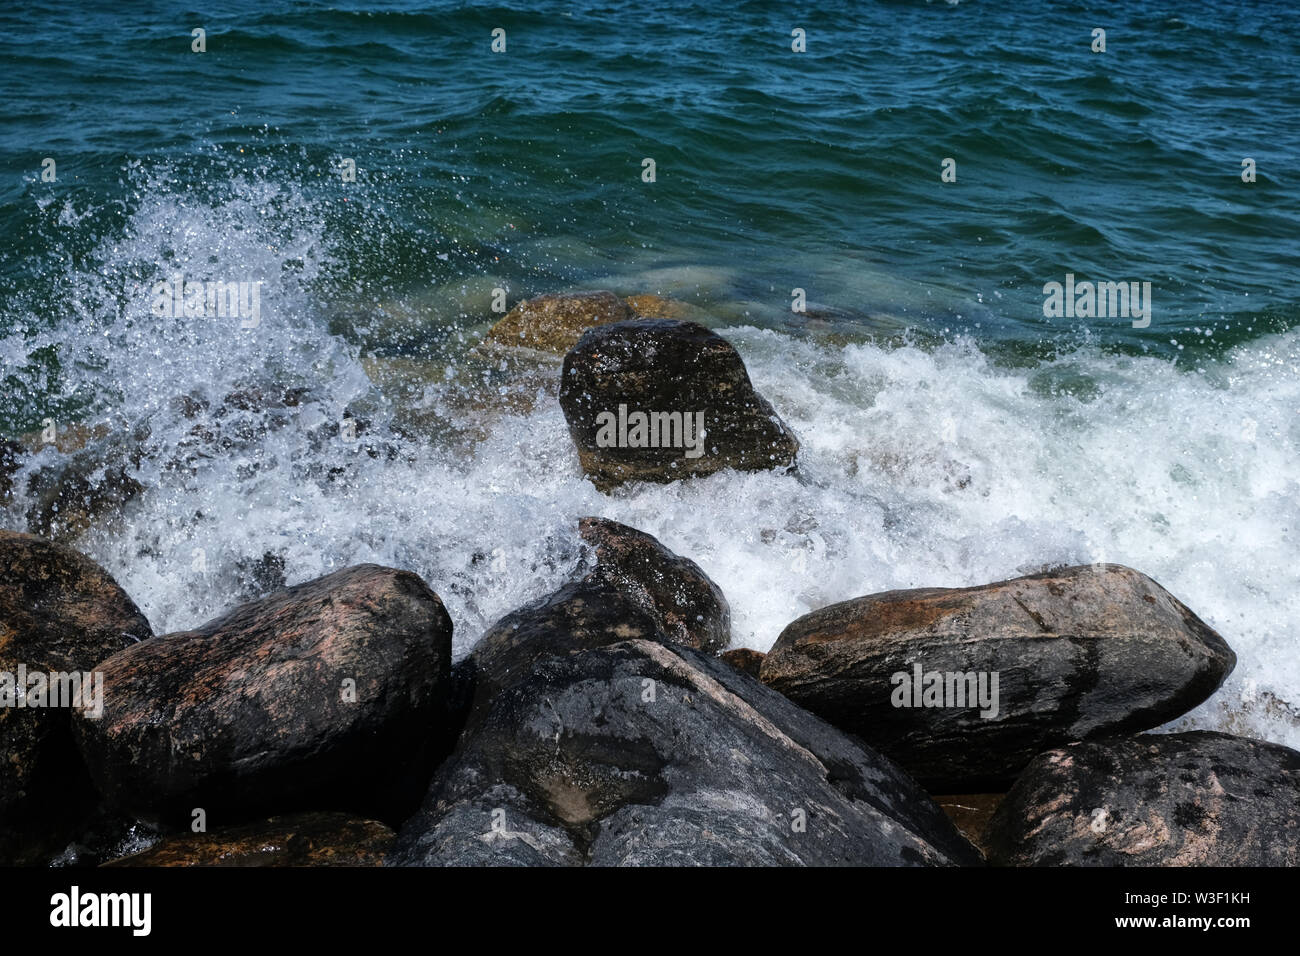 Surf foam against large rocks in blue-green water Stock Photo